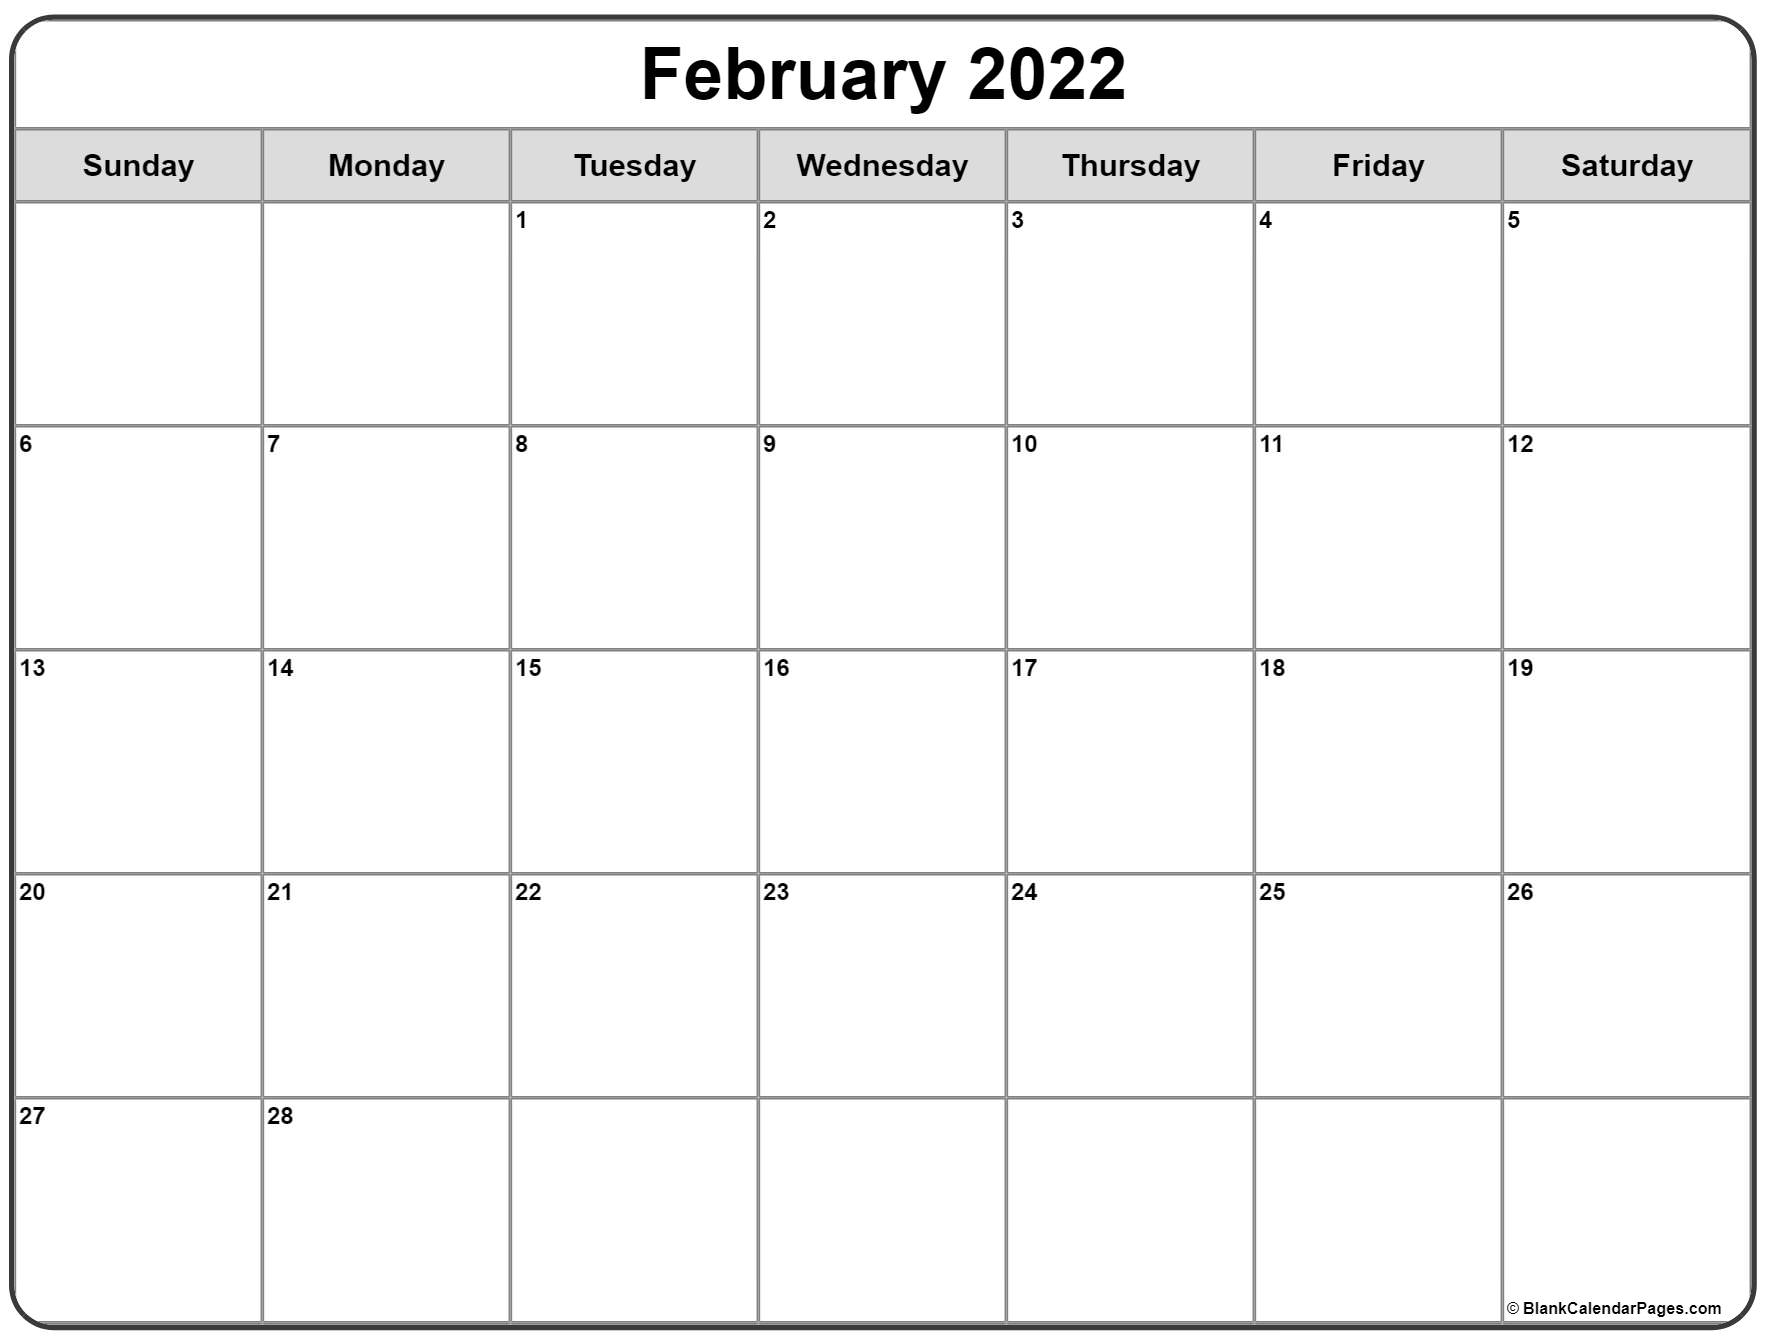 Pick February 2022 Crowd Calendar Disney World